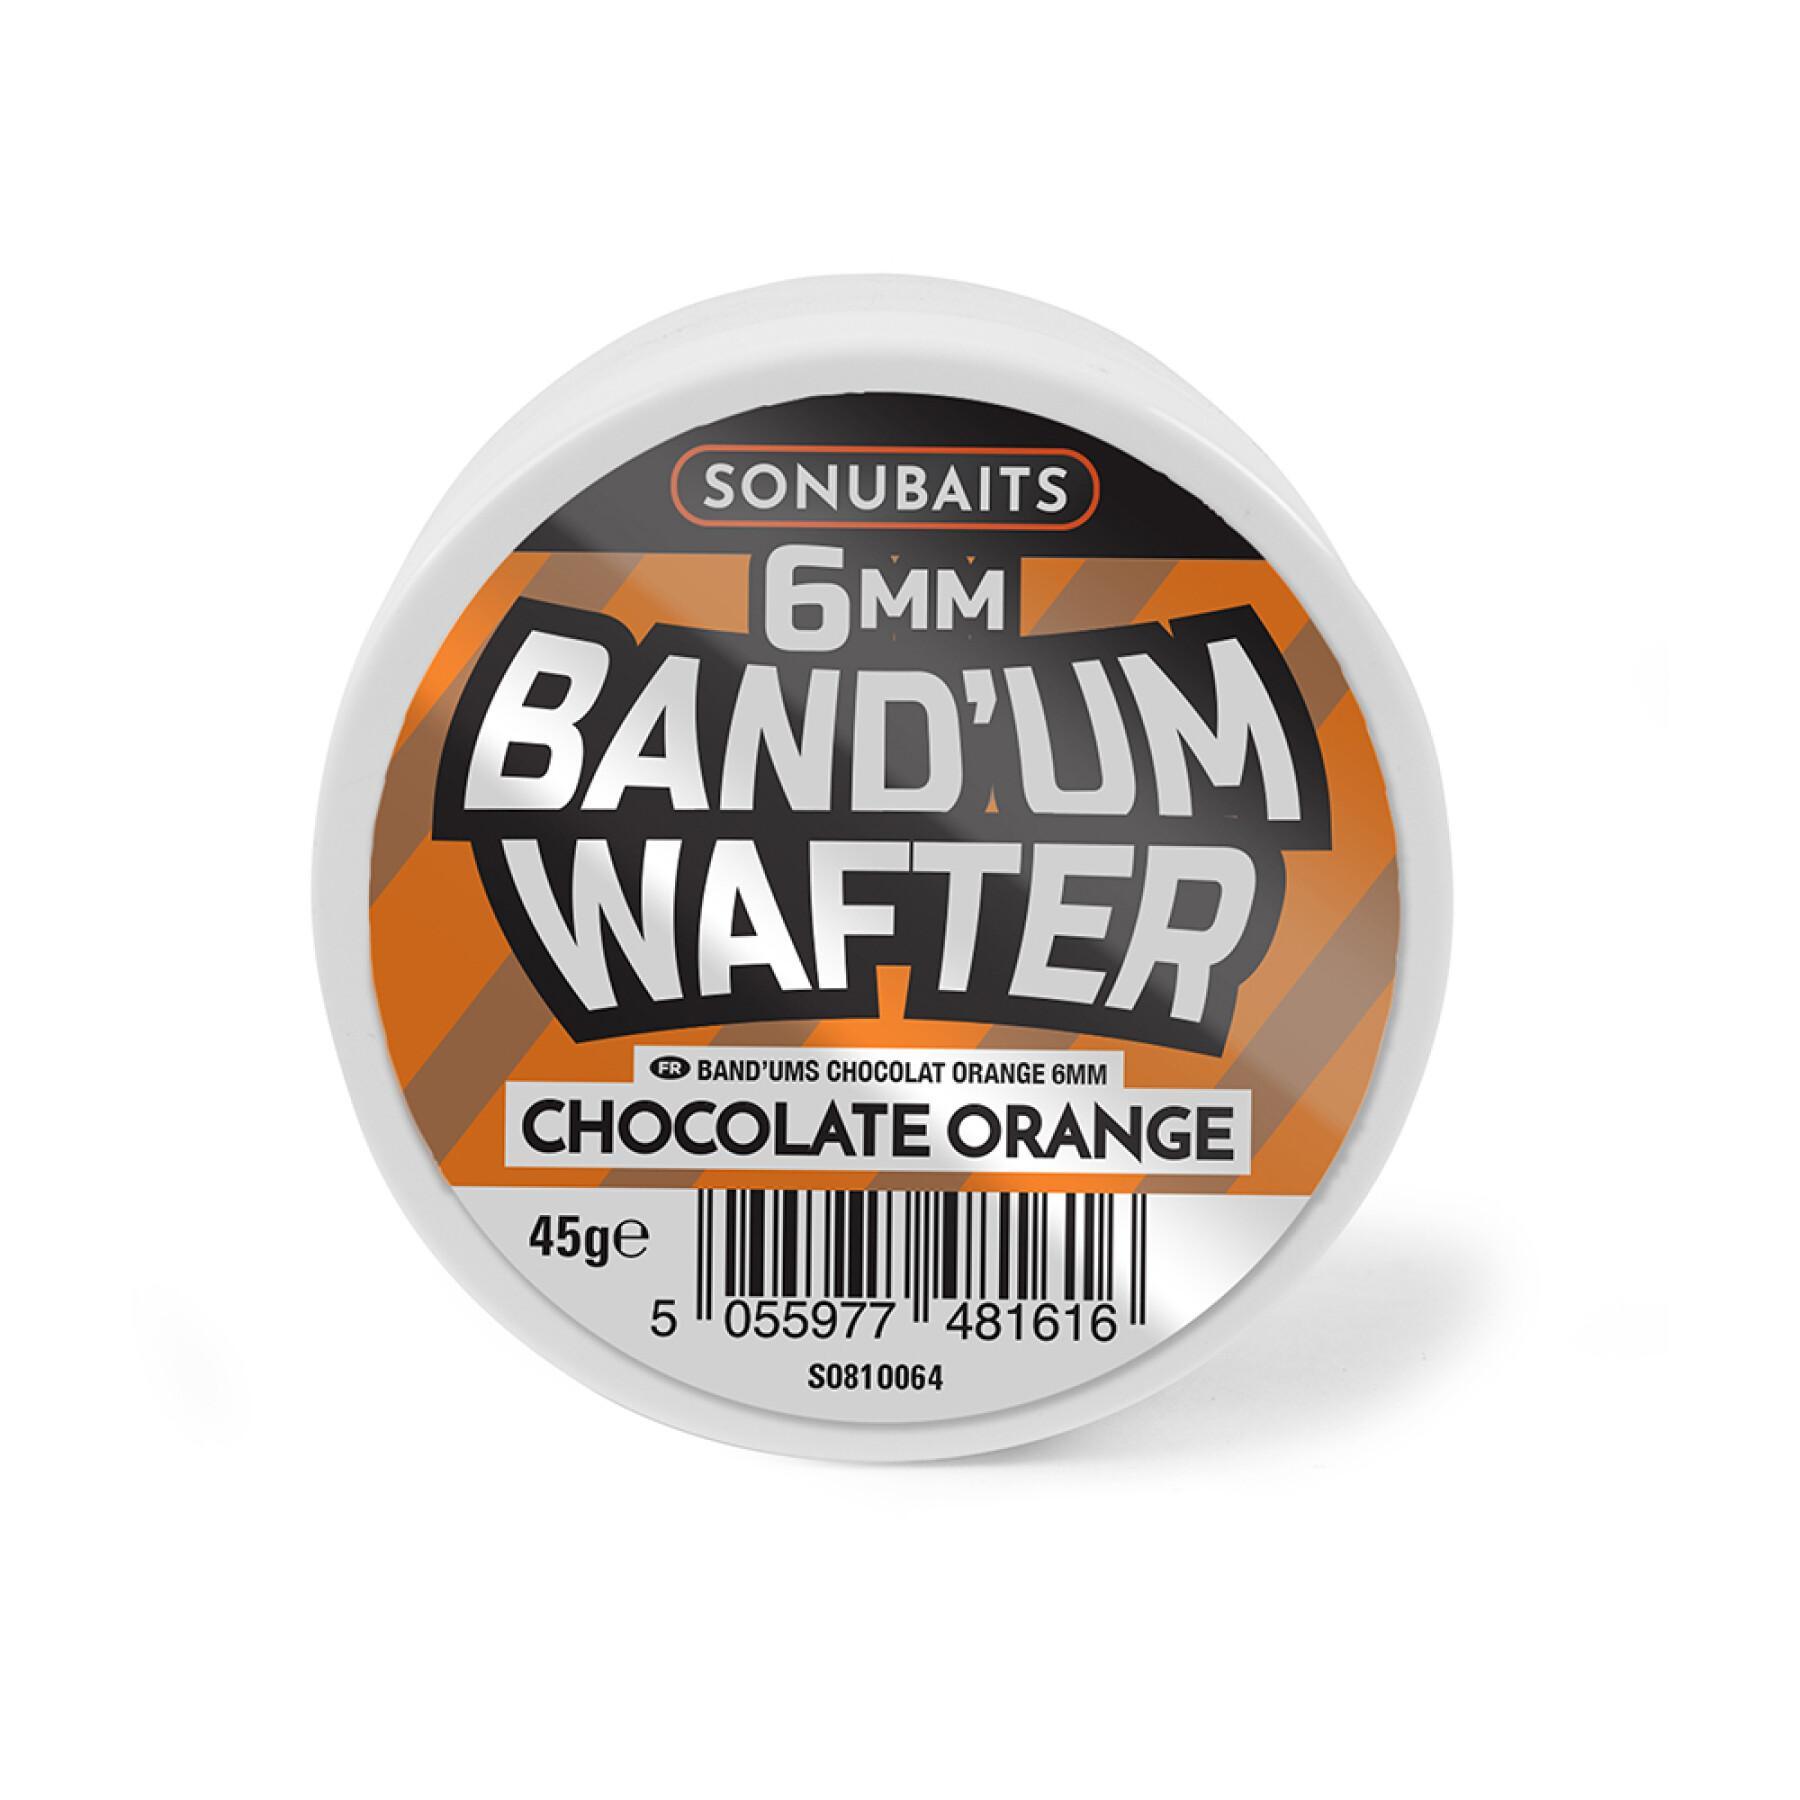 Isco Sonubaits band'um wafters - chocolate orange 1x8